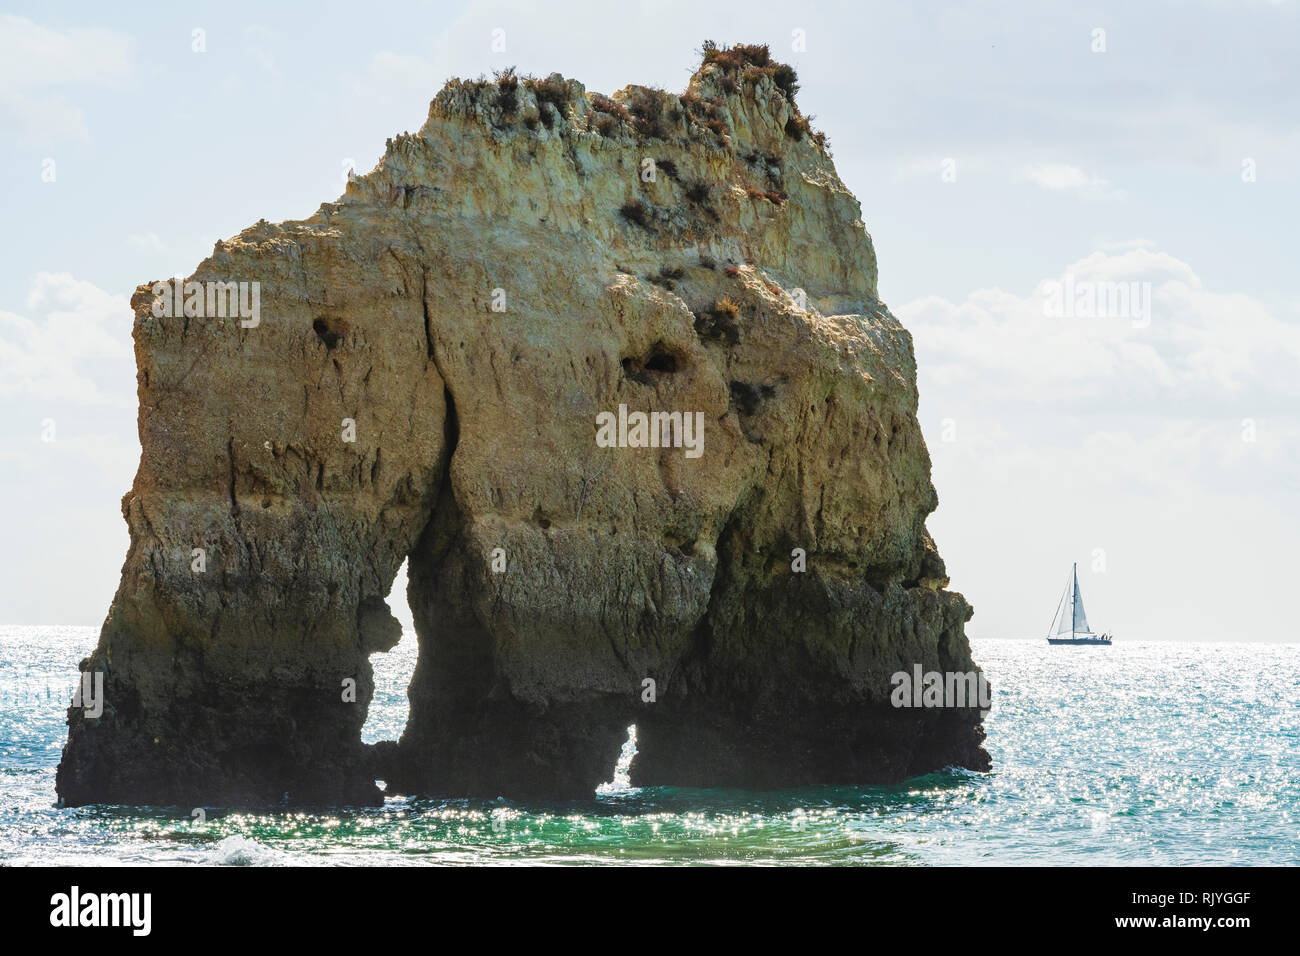 Yachtcharter von großen Felsen im Meer, Alvor, Algarve, Portugal, Europa Stockfoto